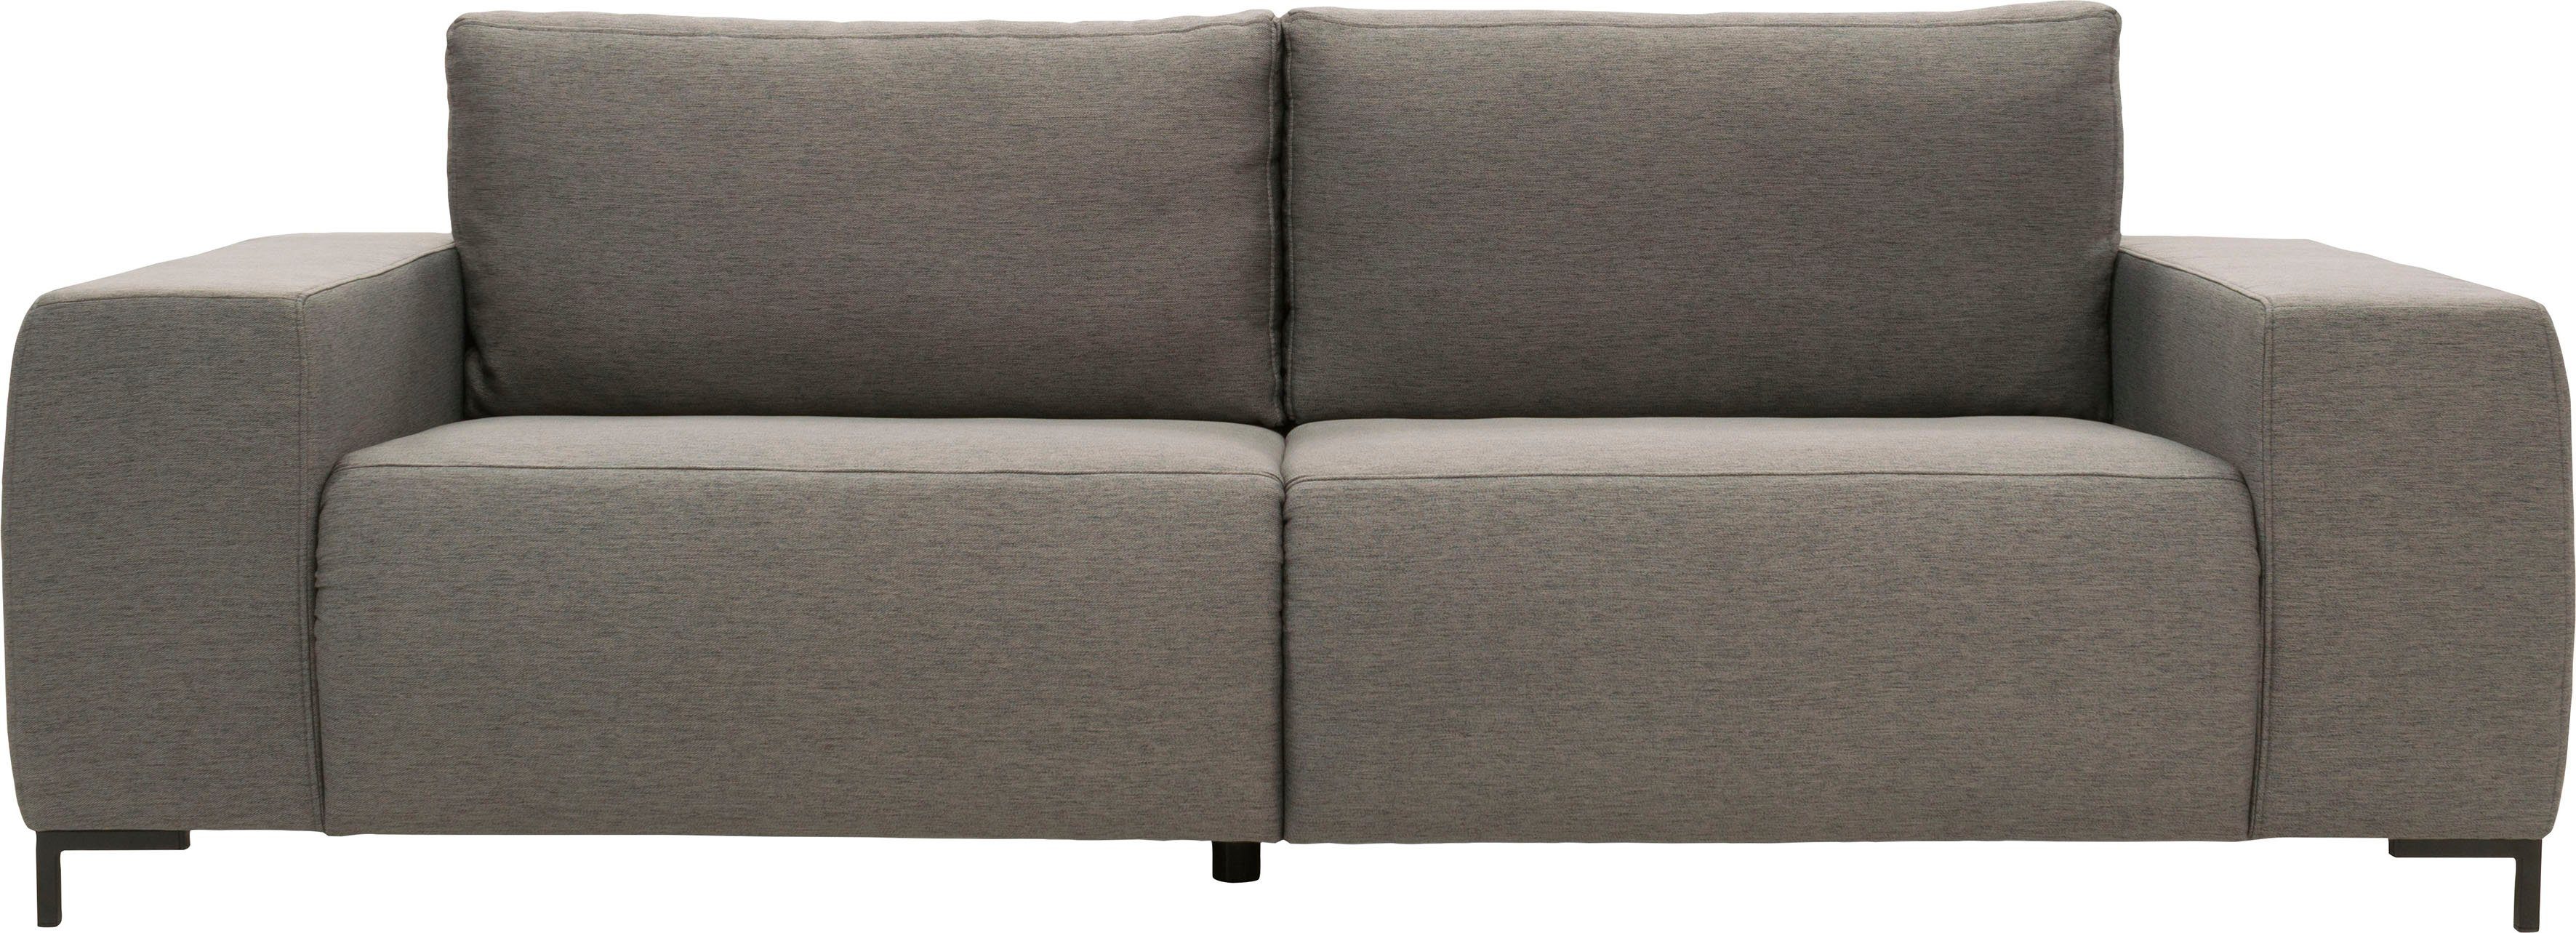 LOOKS by Wolfgang Joop Big-Sofa Looks VI, gerade Linien, in 2 Bezugsqualitäten | Big Sofas